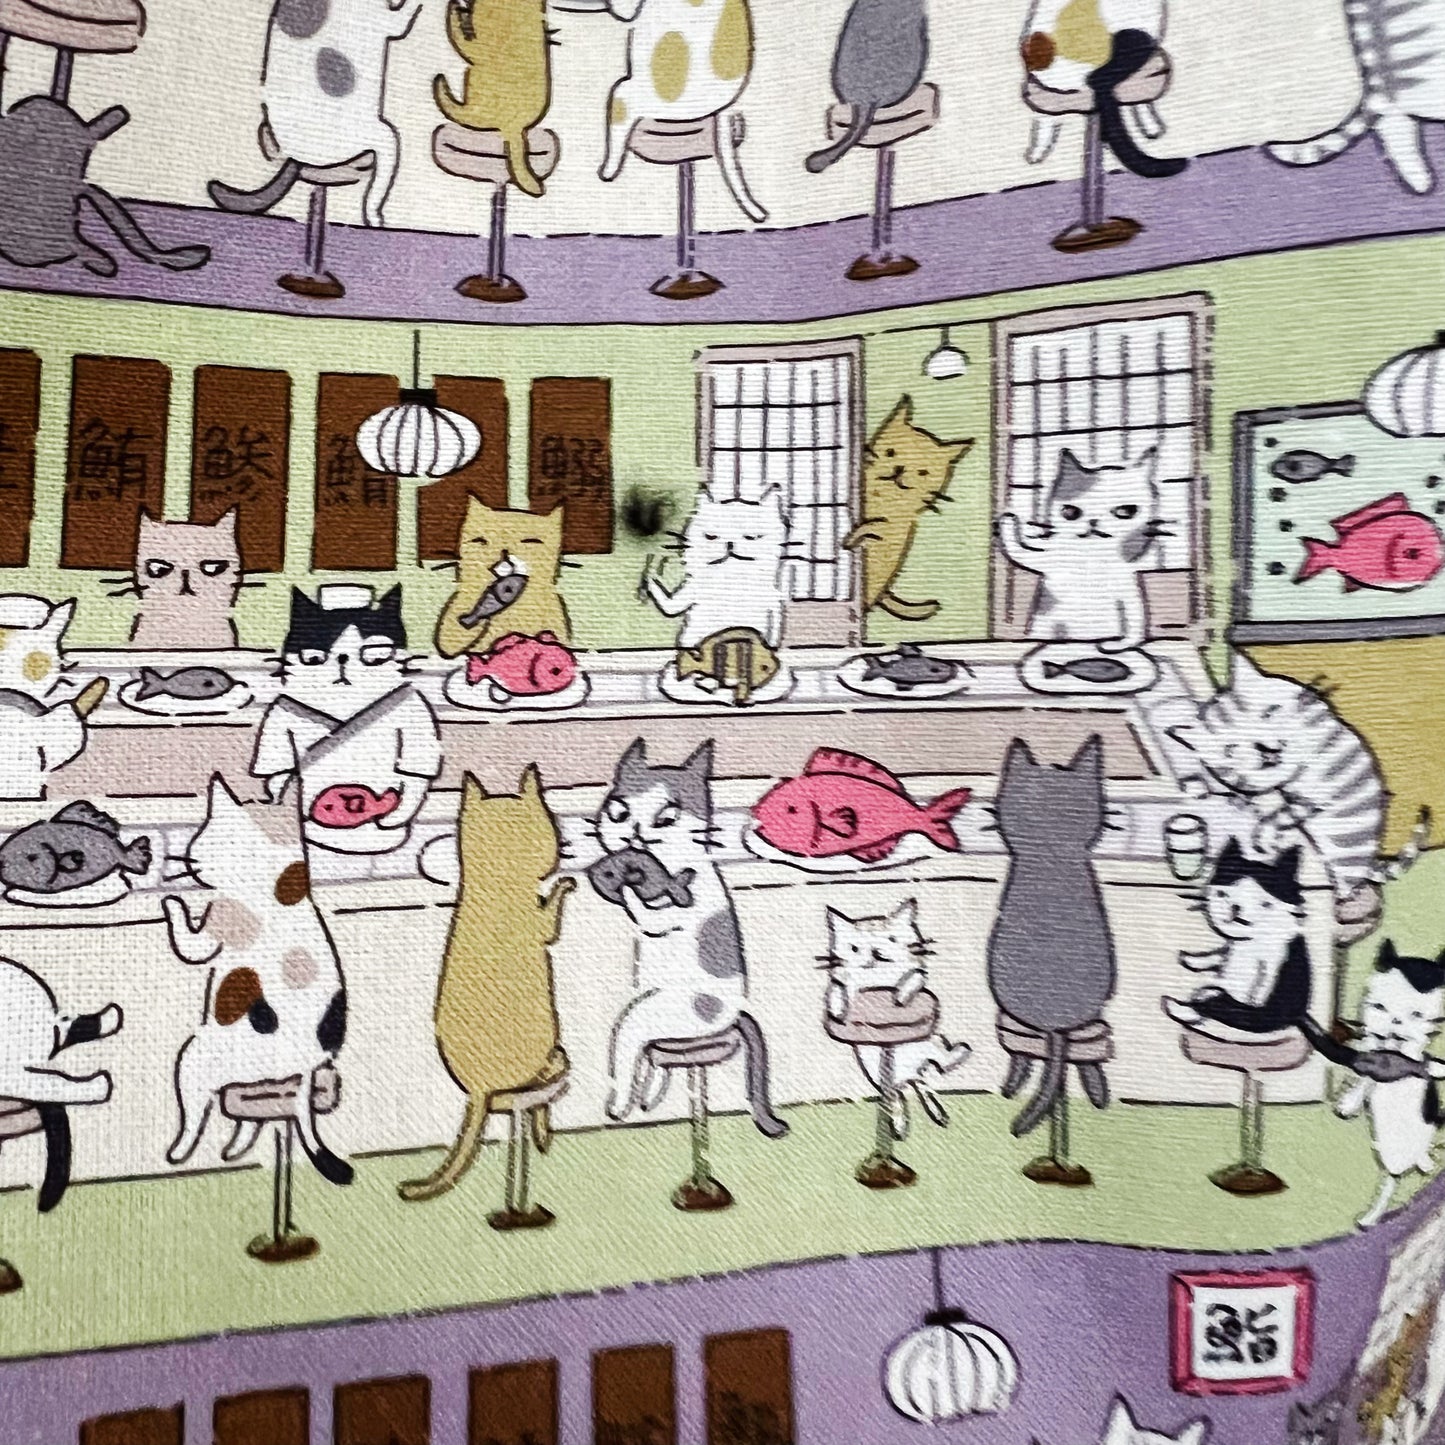 Cats at sushi restaurant midi skirt